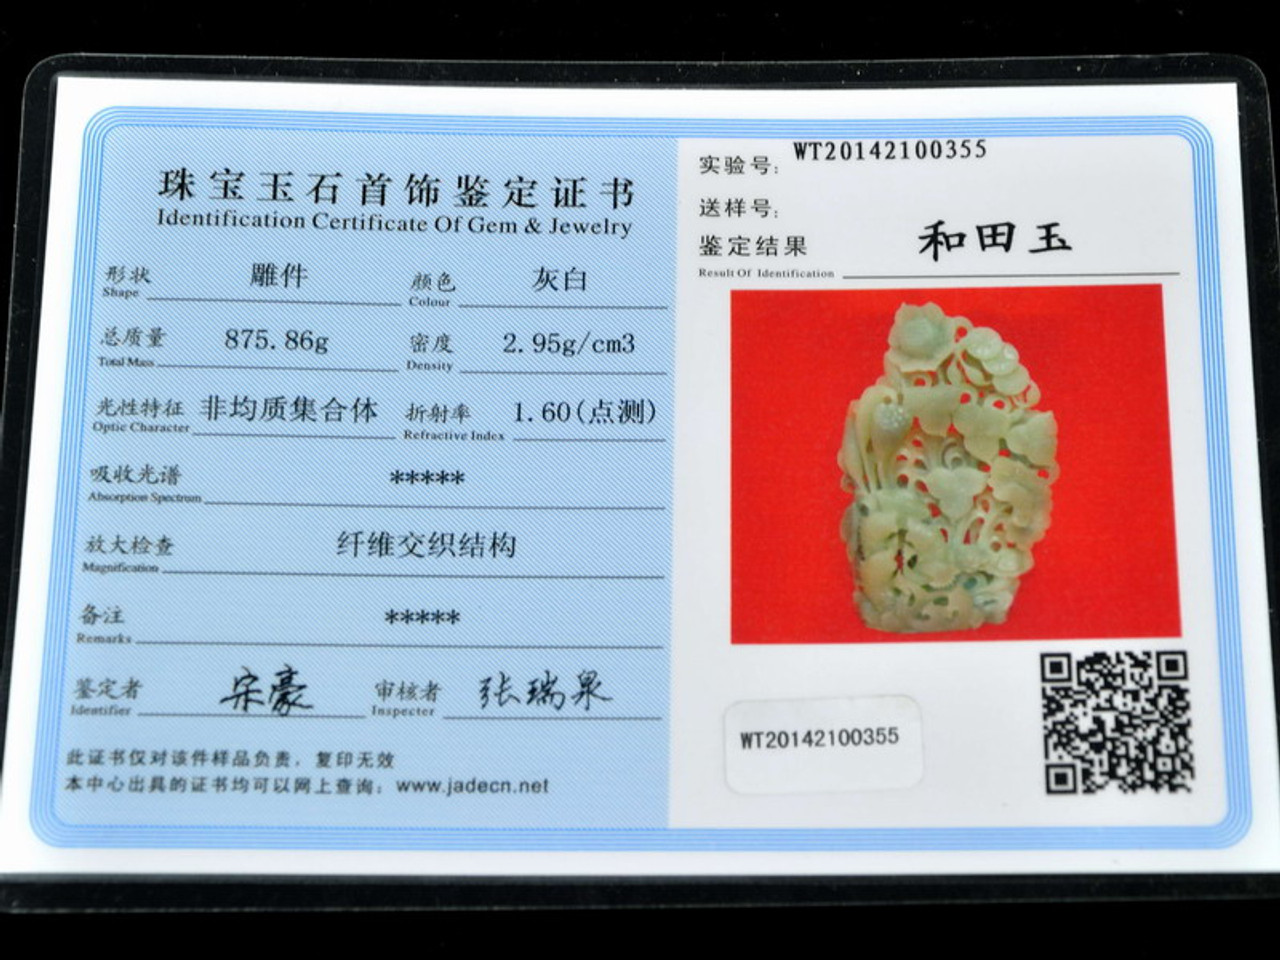 jade Certificate 